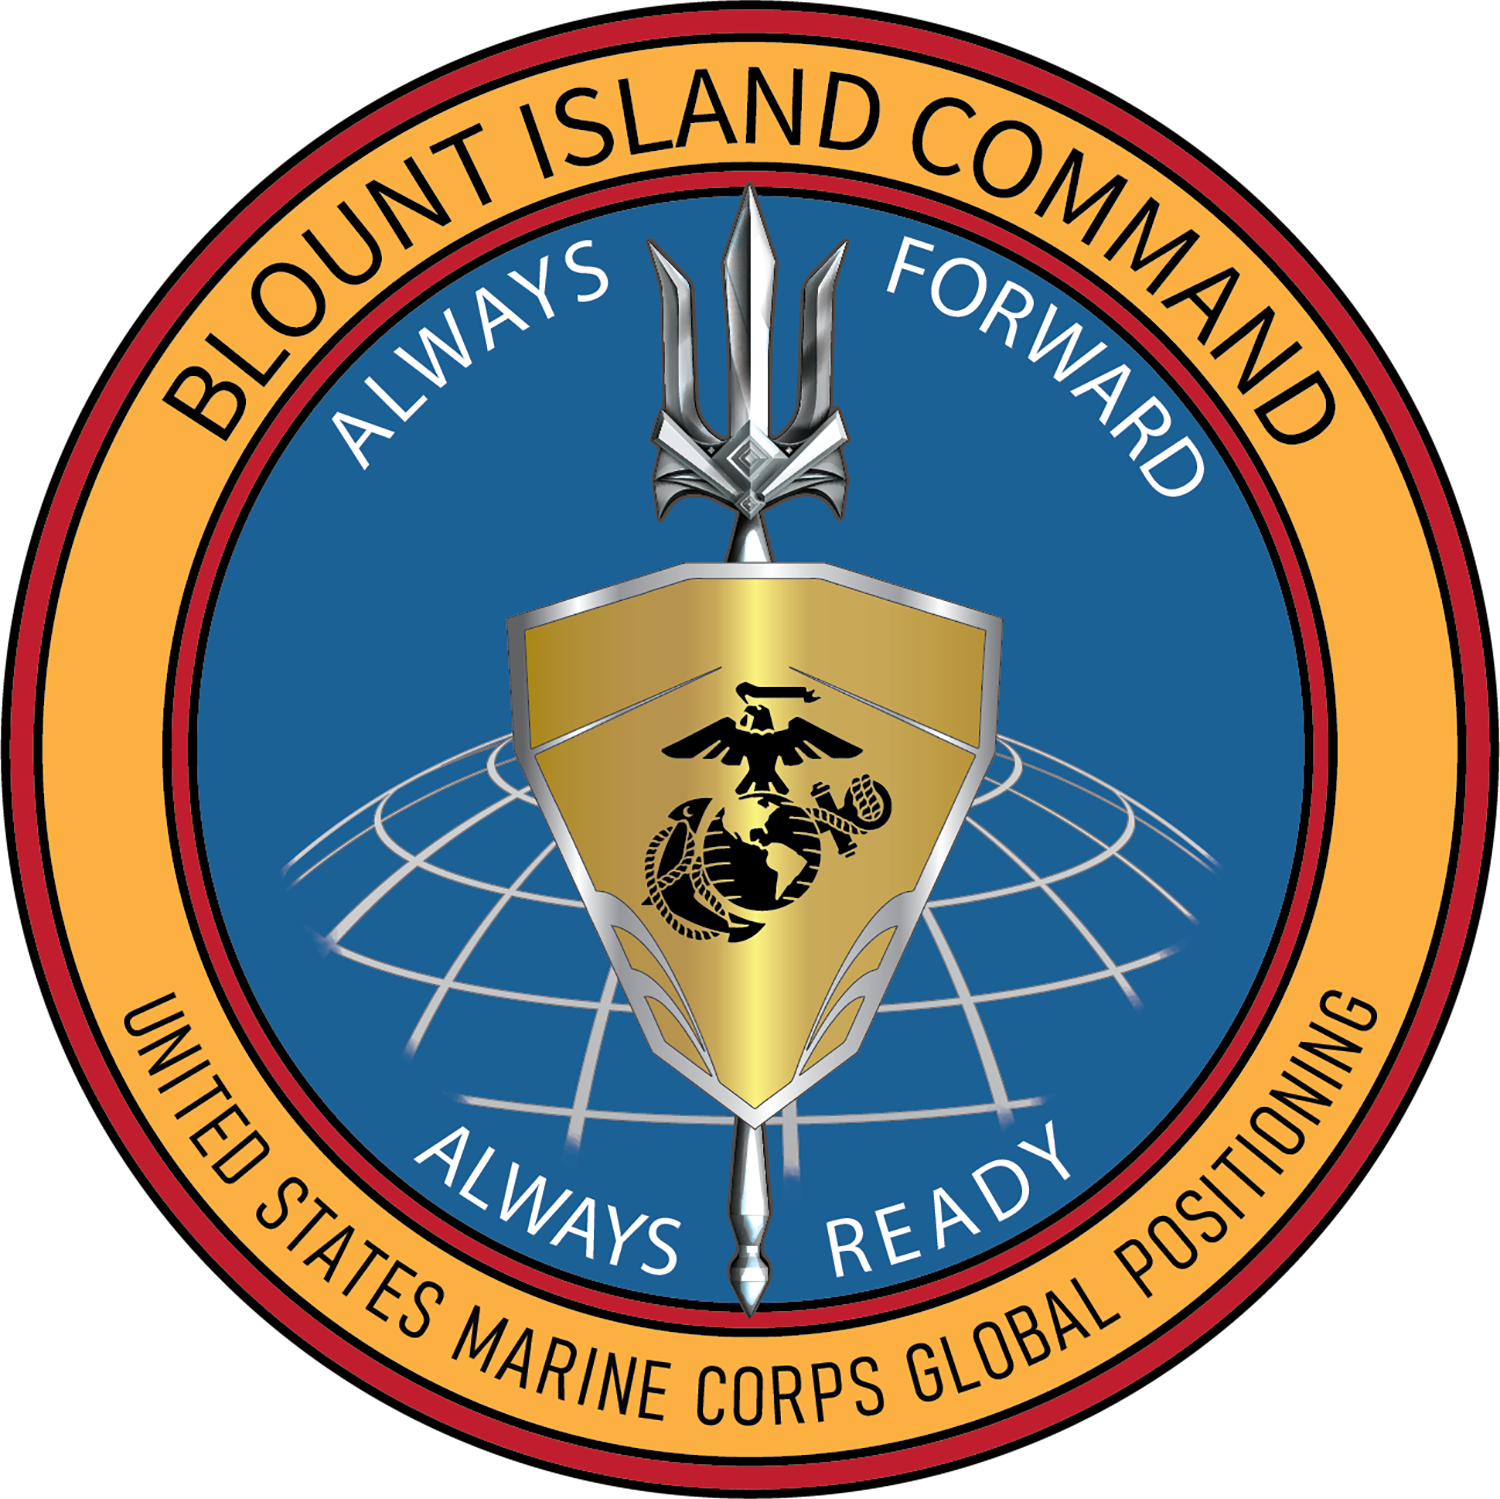 Blount Island Command